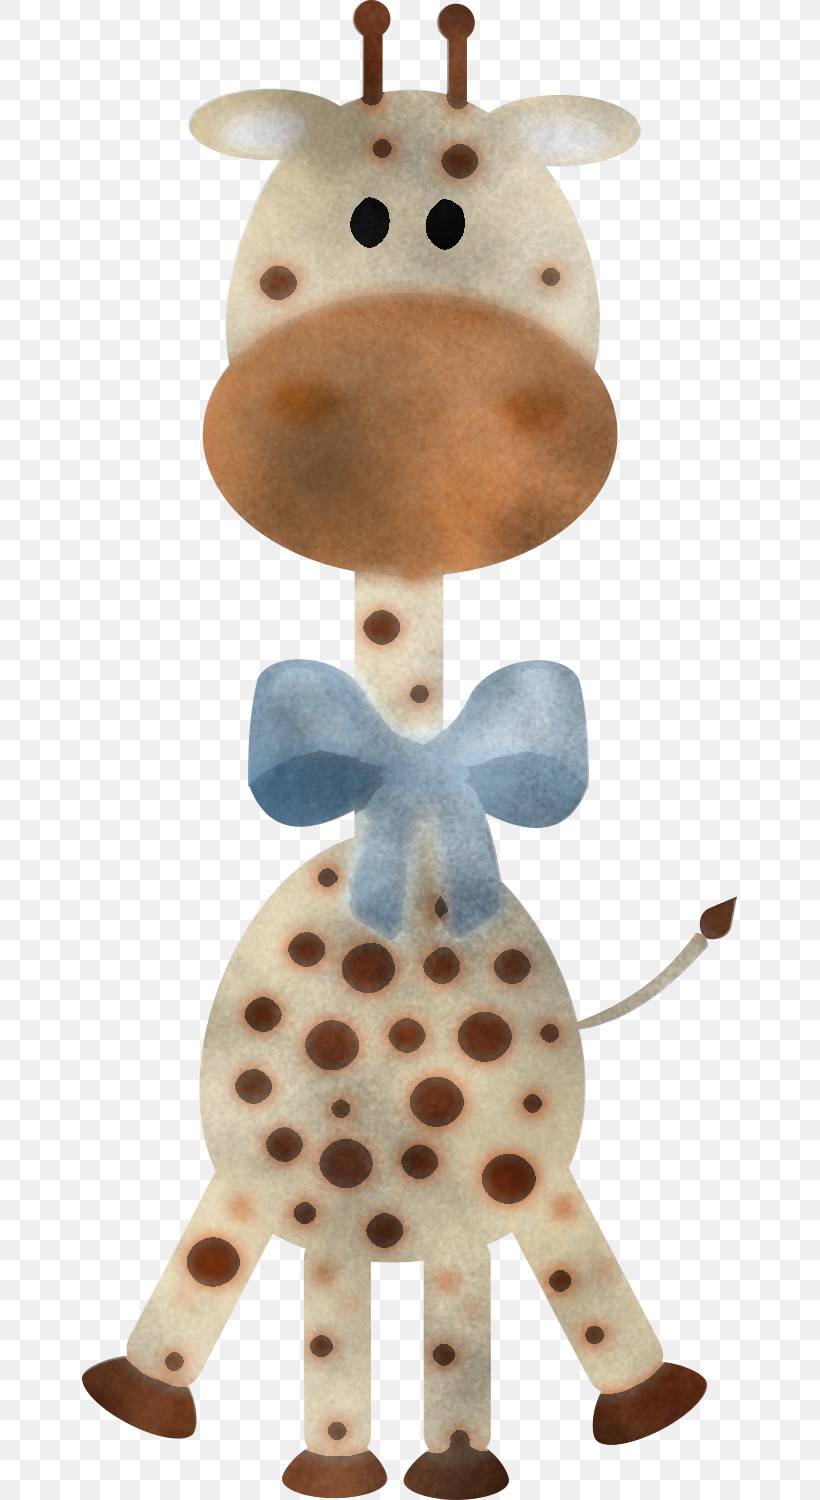 Giraffe Stuffed Toy, PNG, 655x1500px, Giraffe, Stuffed Toy Download Free